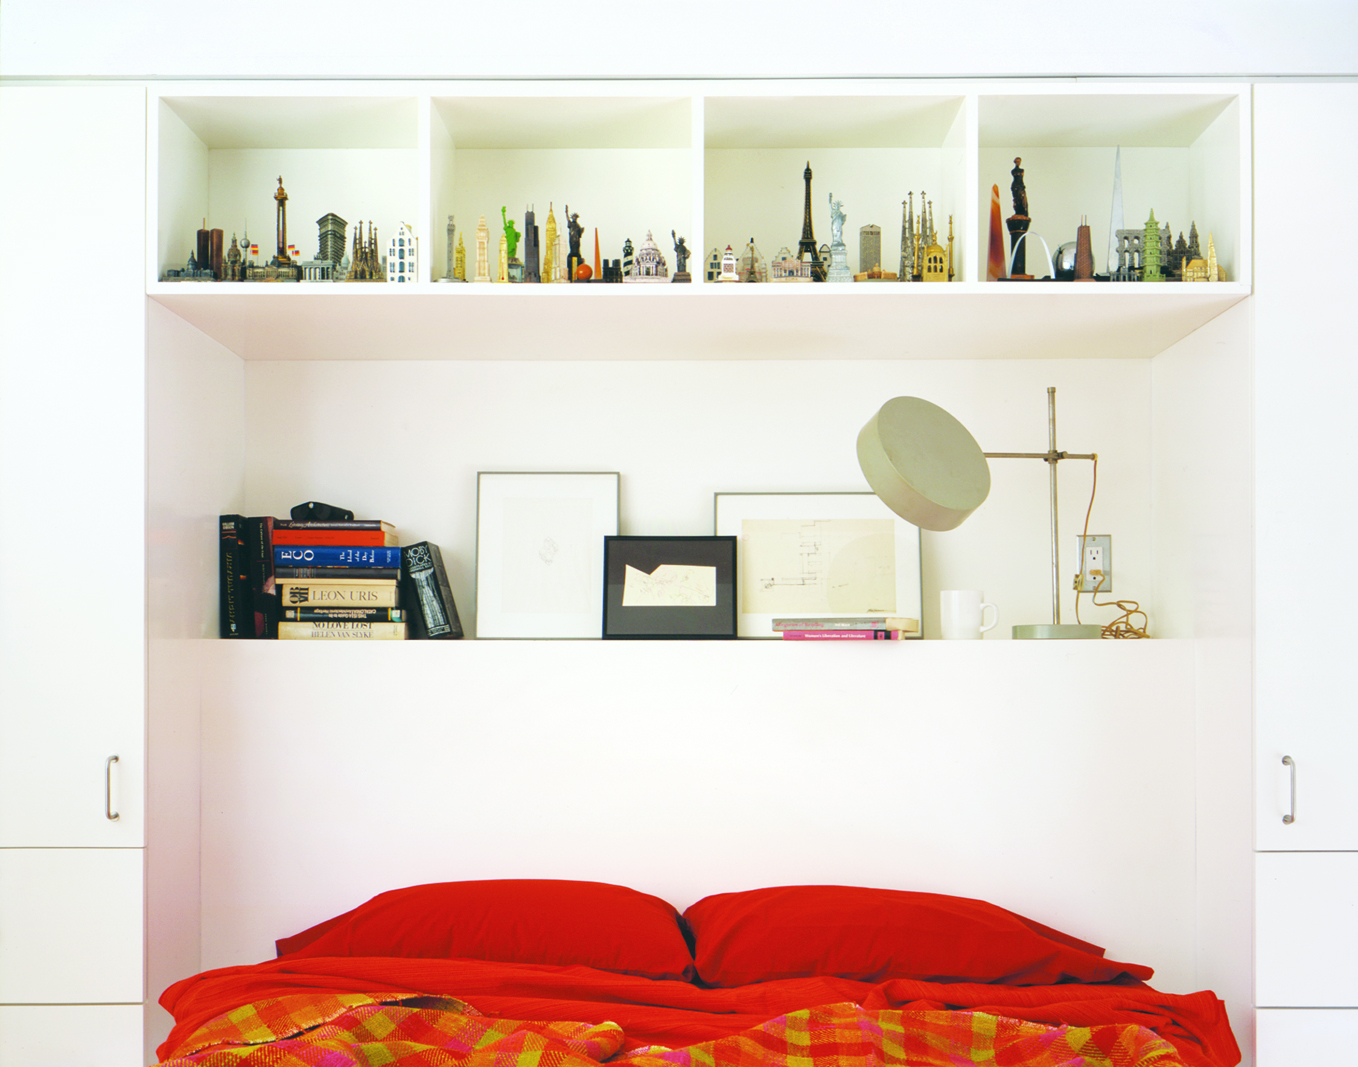 res4-resolution-4-architecture-modern-residential-esienman-davidson-apartment-interior-bedroom.jpg